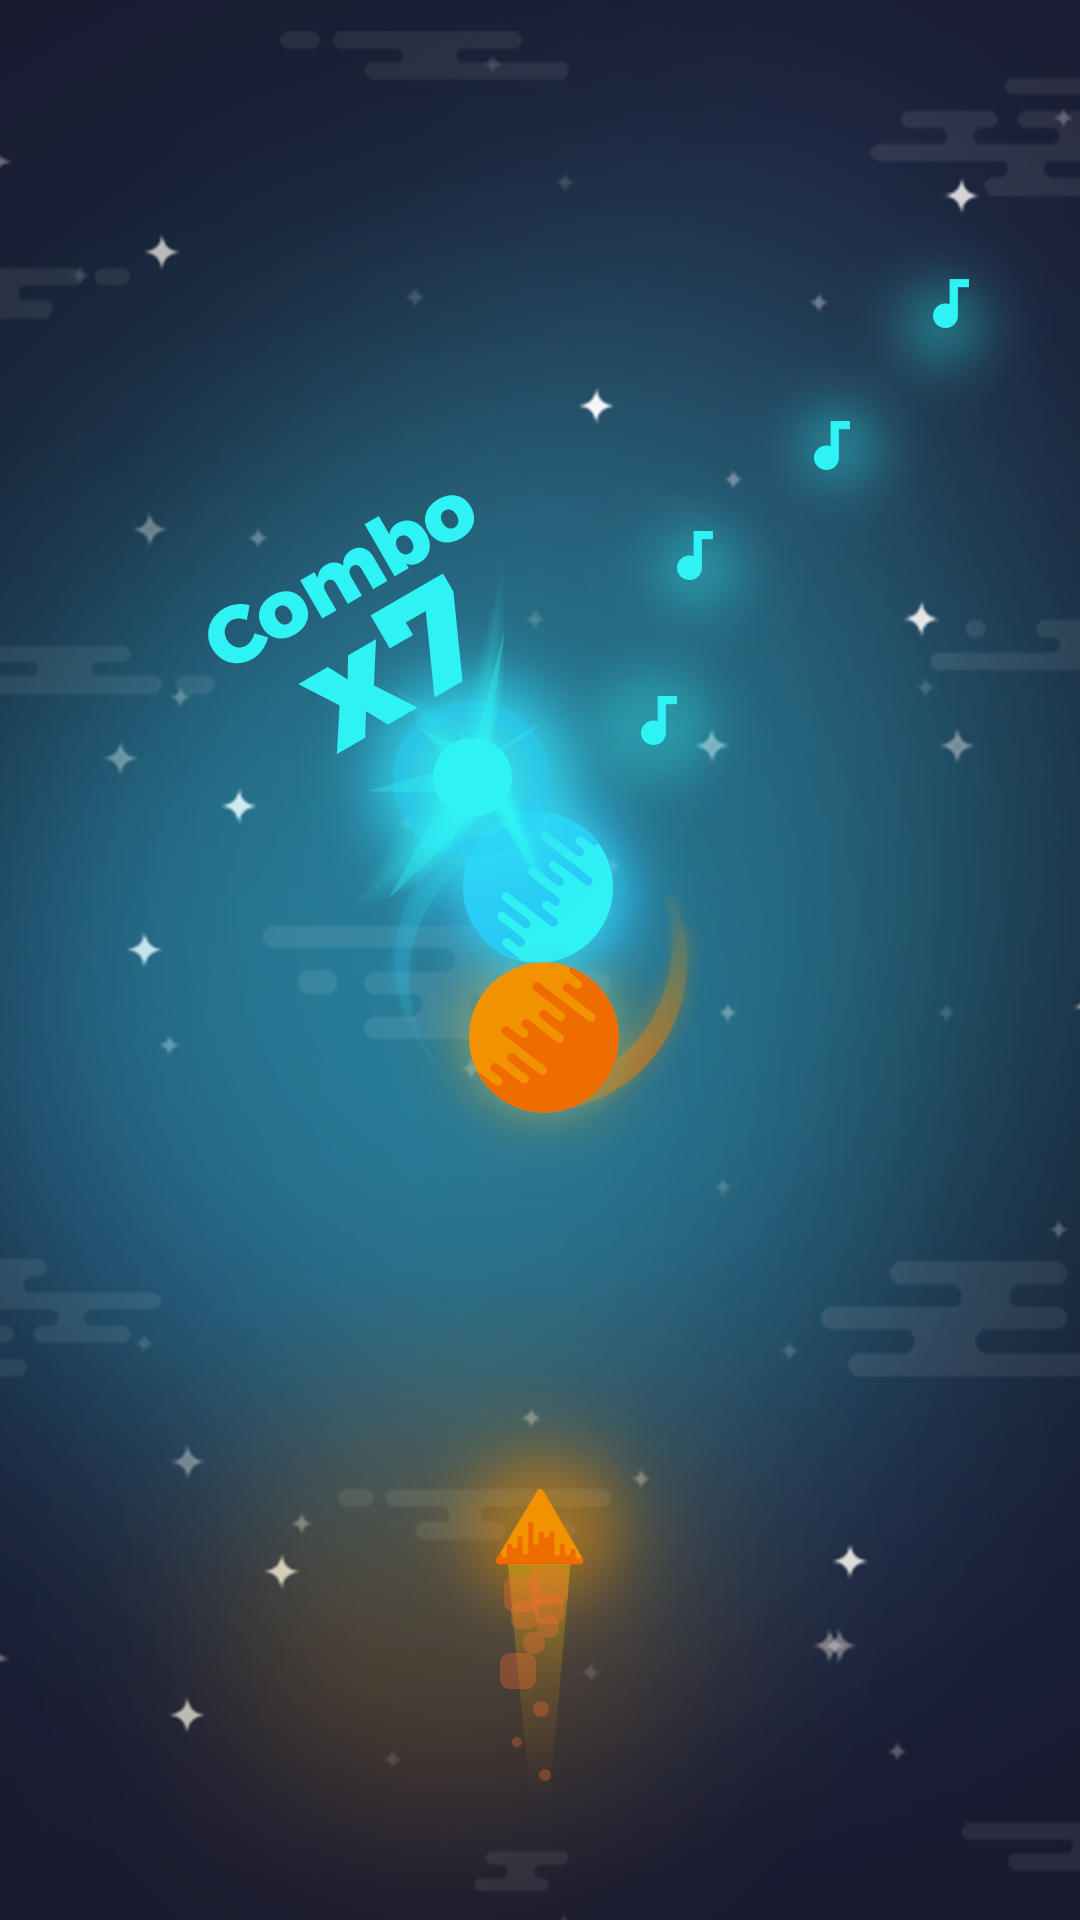 Screenshot 1 of Codots - ритм-игра 1.0